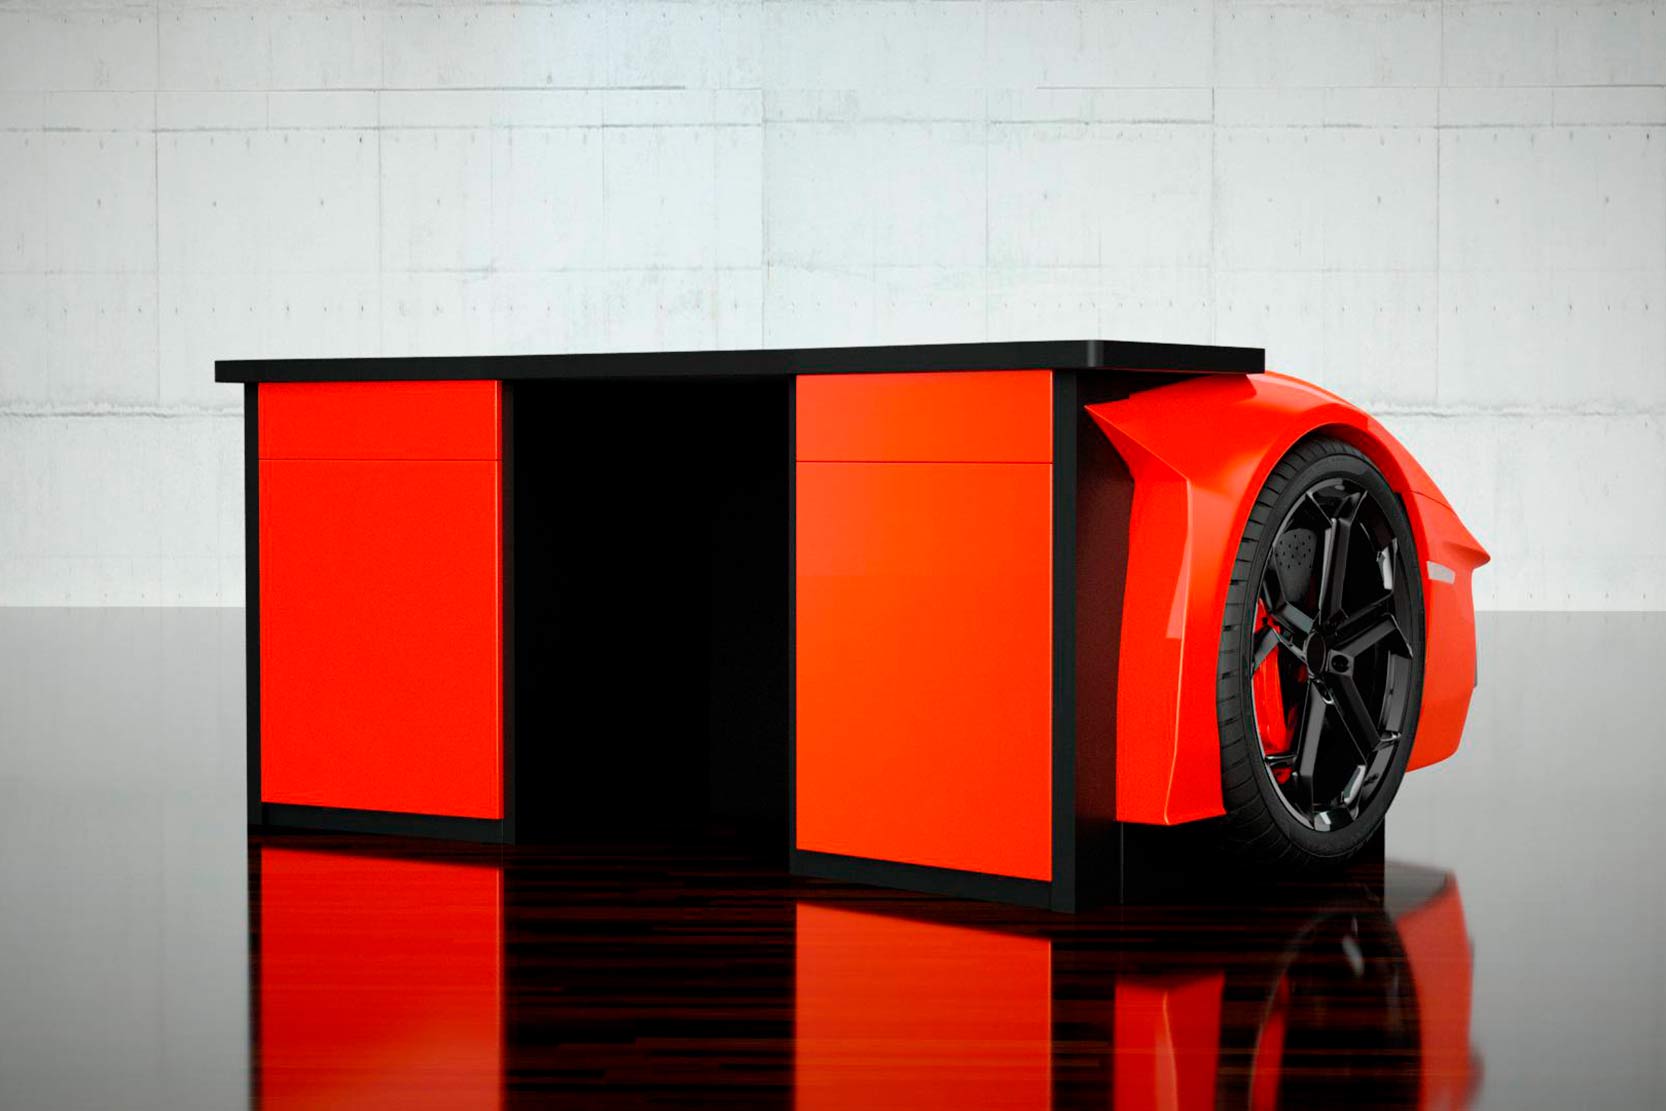 Lamborghini Egoista rouge et noire